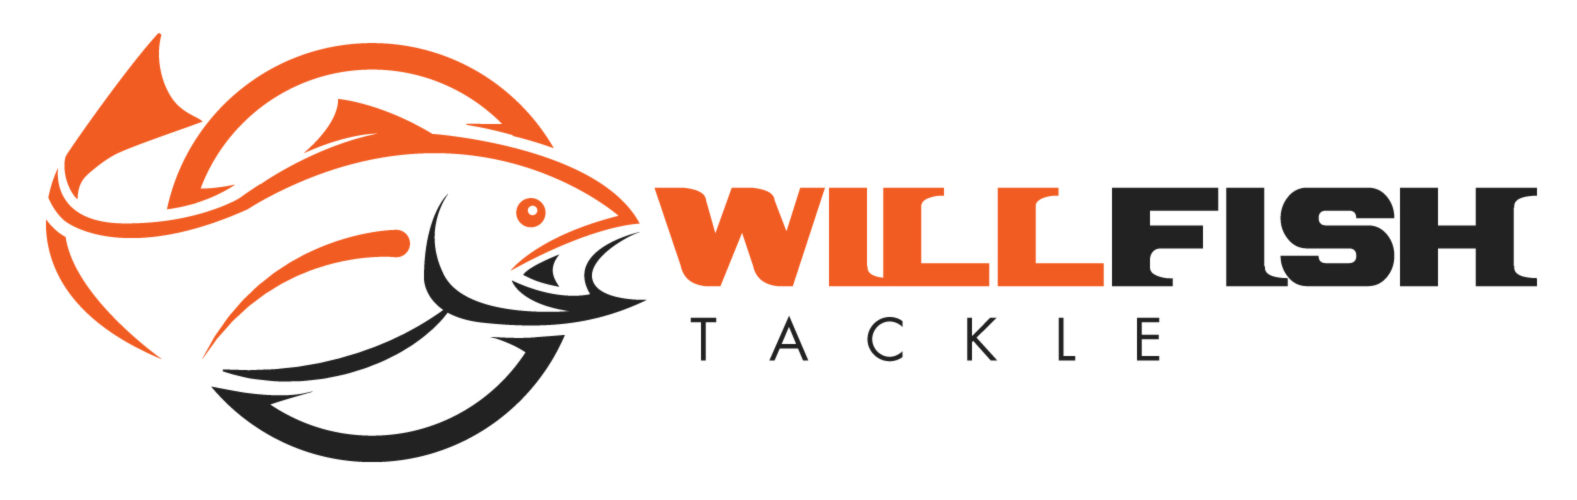 https://willfishtackle.com/wp-content/uploads/2017/01/cropped-WillFish-logo-final-draft-Left-Alligned-logo-for-white-backgrounds.jpg